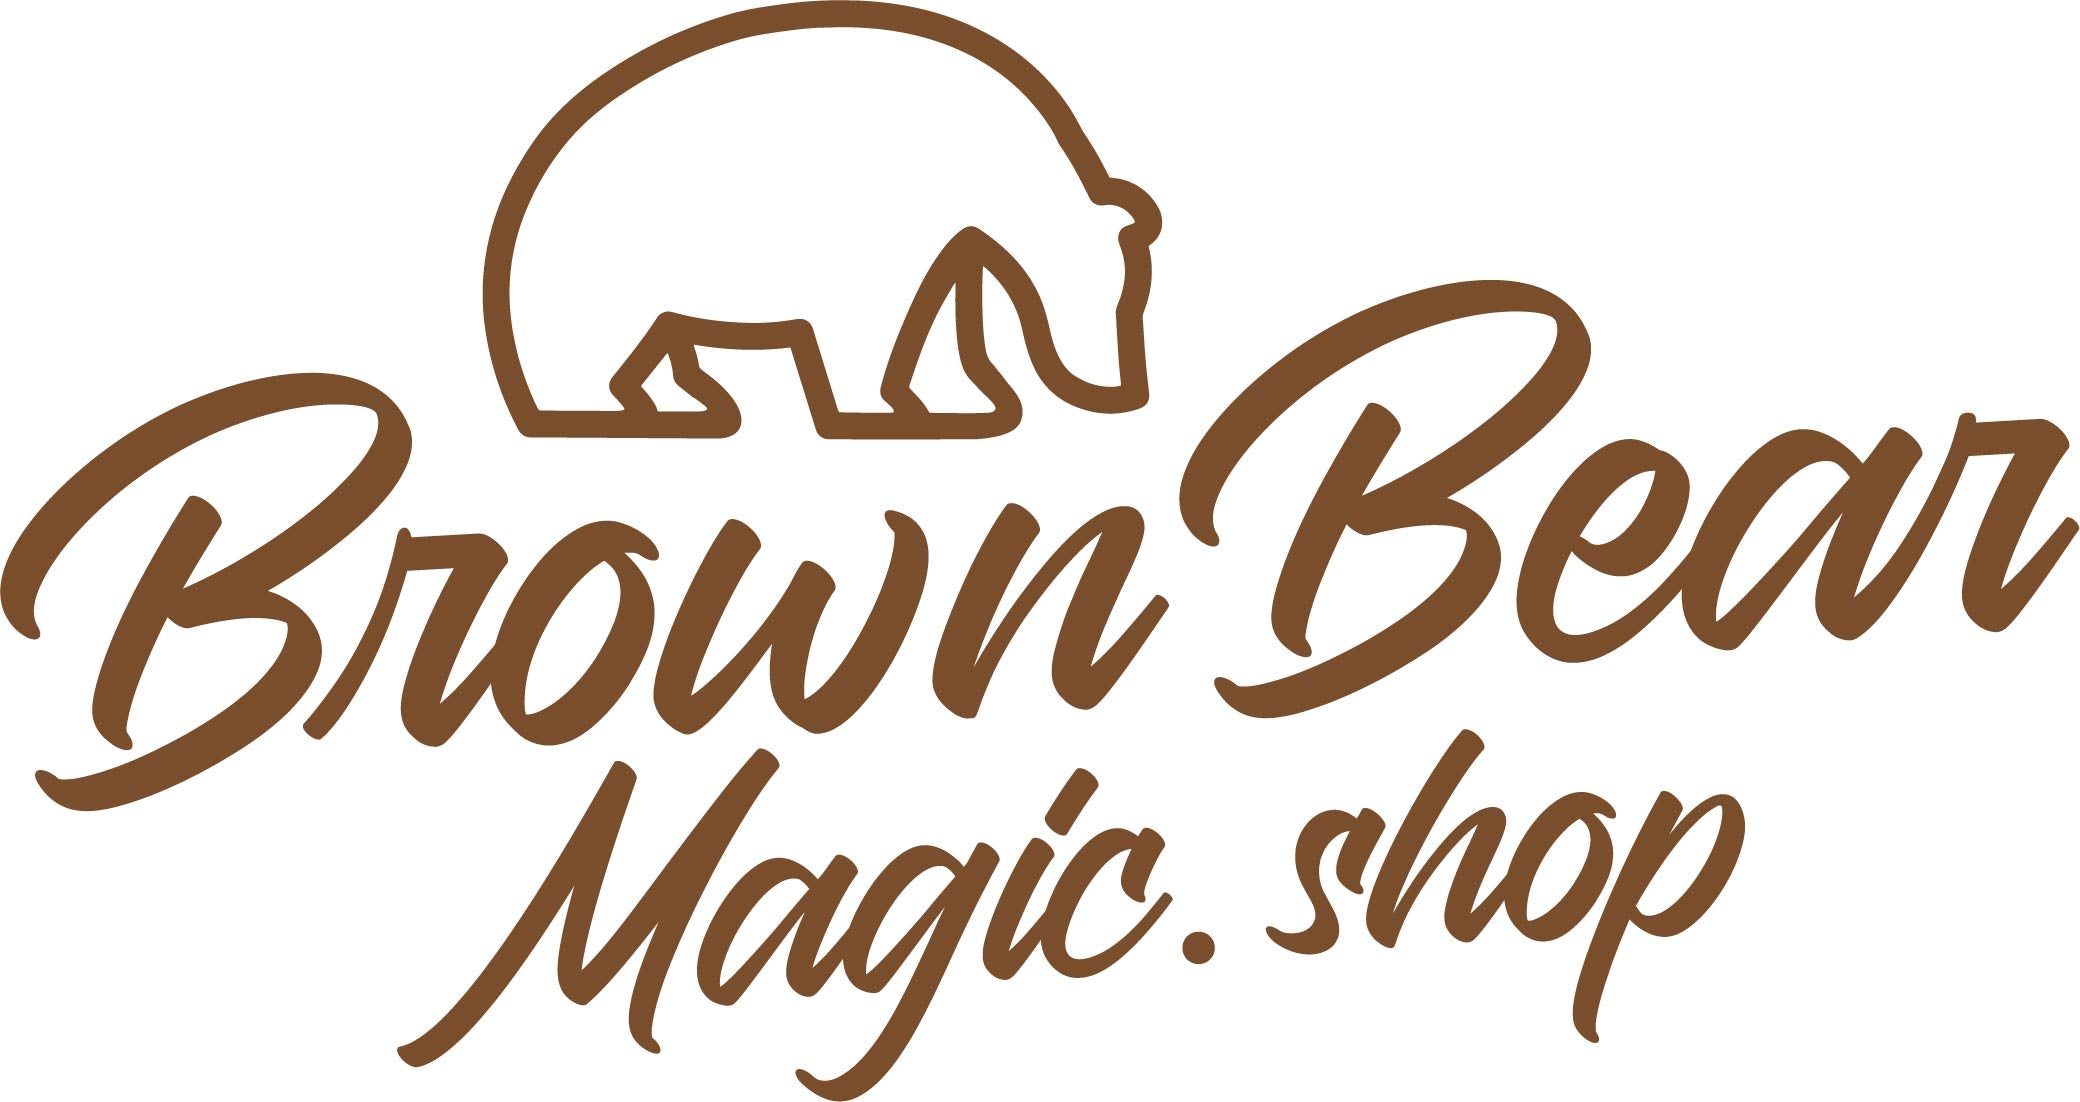 www.brownbearmagic.shop